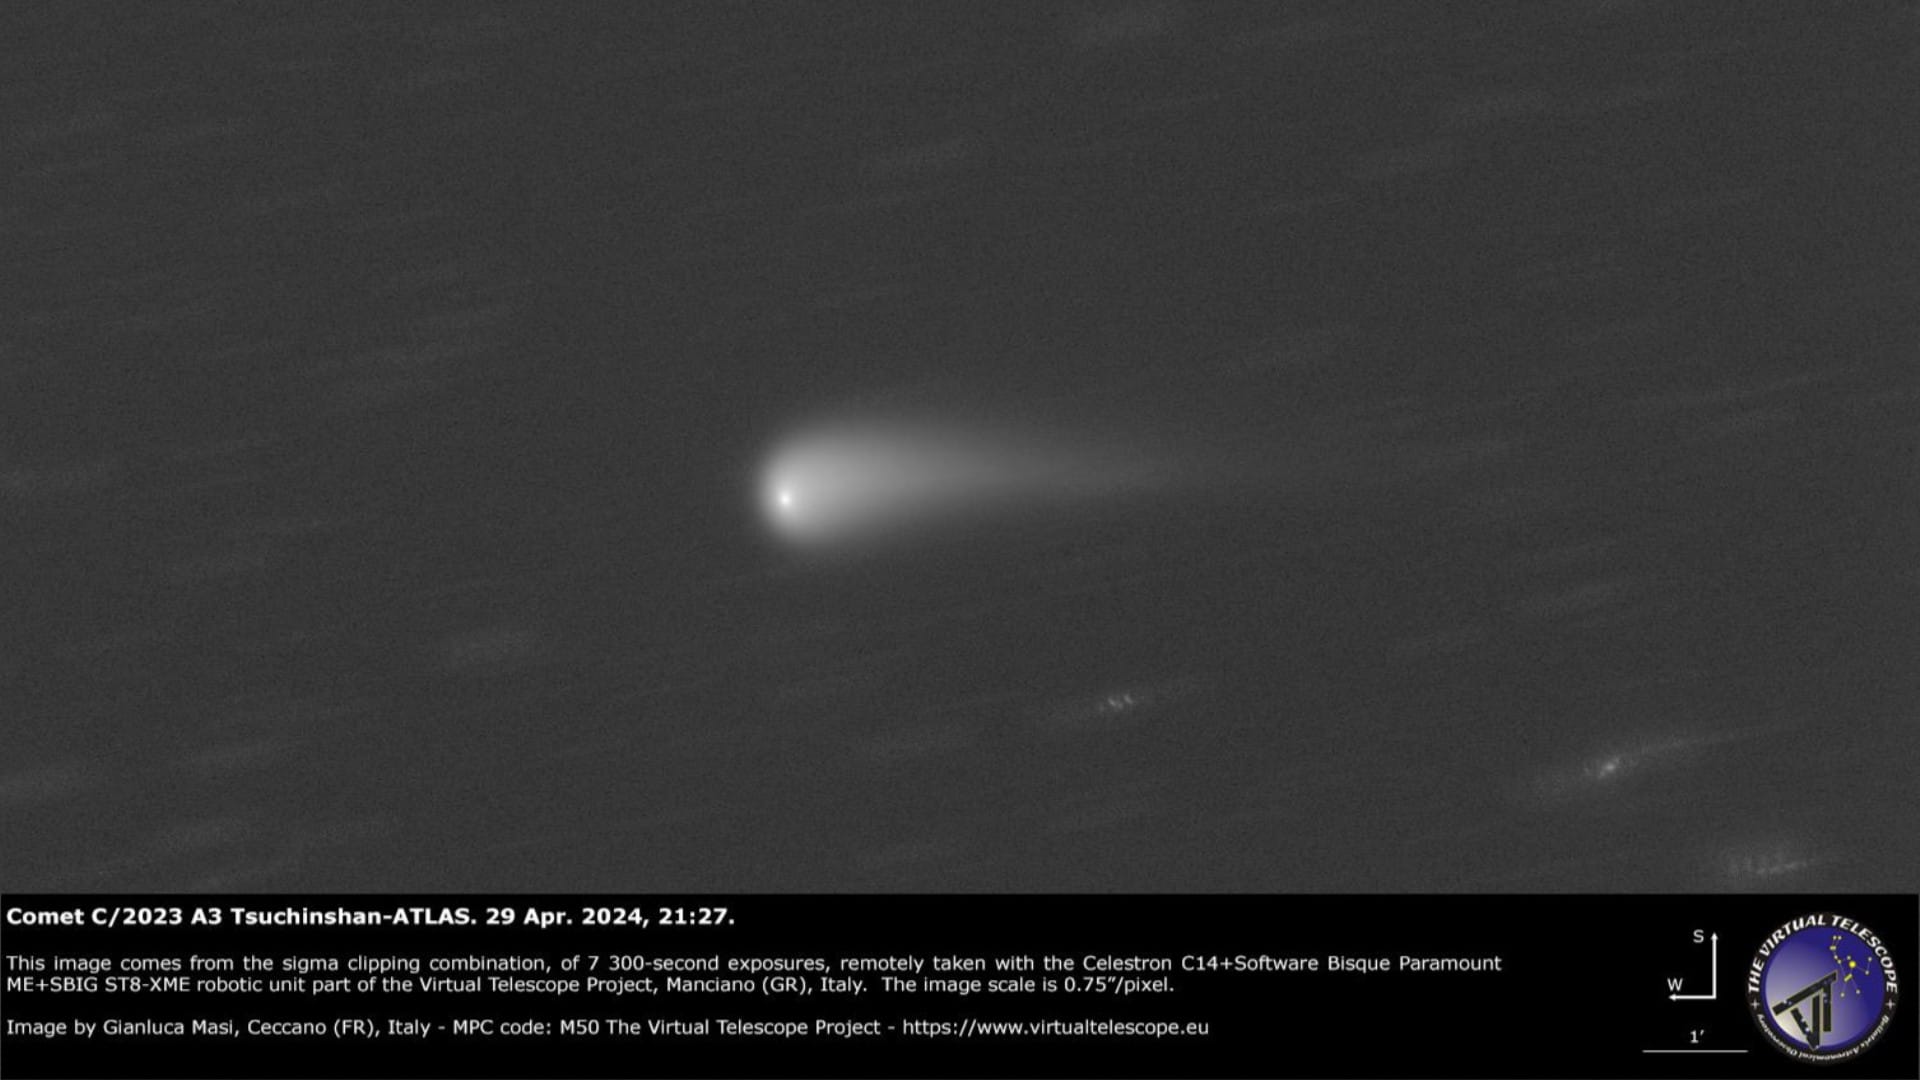 Comet C/2023 A3 Tsuchinshan-ATLAS on Apr. 29, 2024